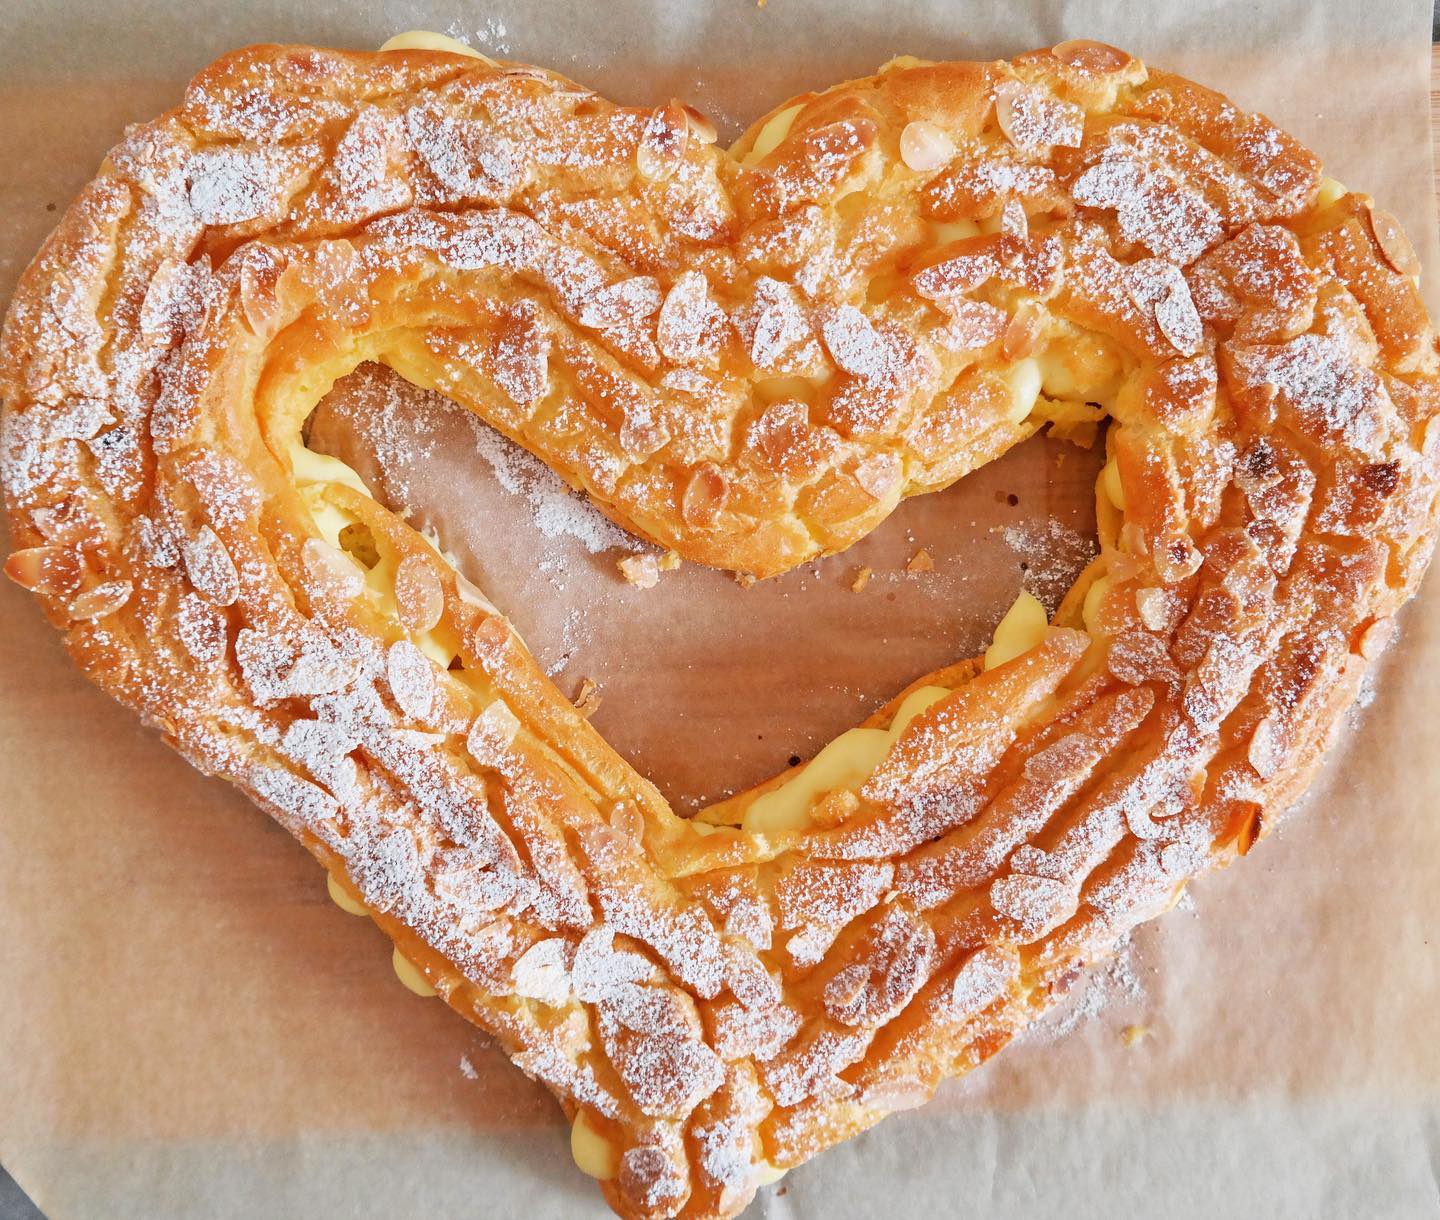 Paris-Brest shaped as ❤️, cause love is in the air 💕
.
.
.
.
#bake #baking #homebaking #homebaked #bakefromscratch #bakingfromscratch #ilovebaking #parisbrest #frenchpastry #dessert #desserts #dessertporn #instagood #delicious #bakinglove #bakingtime #food #foodblogger